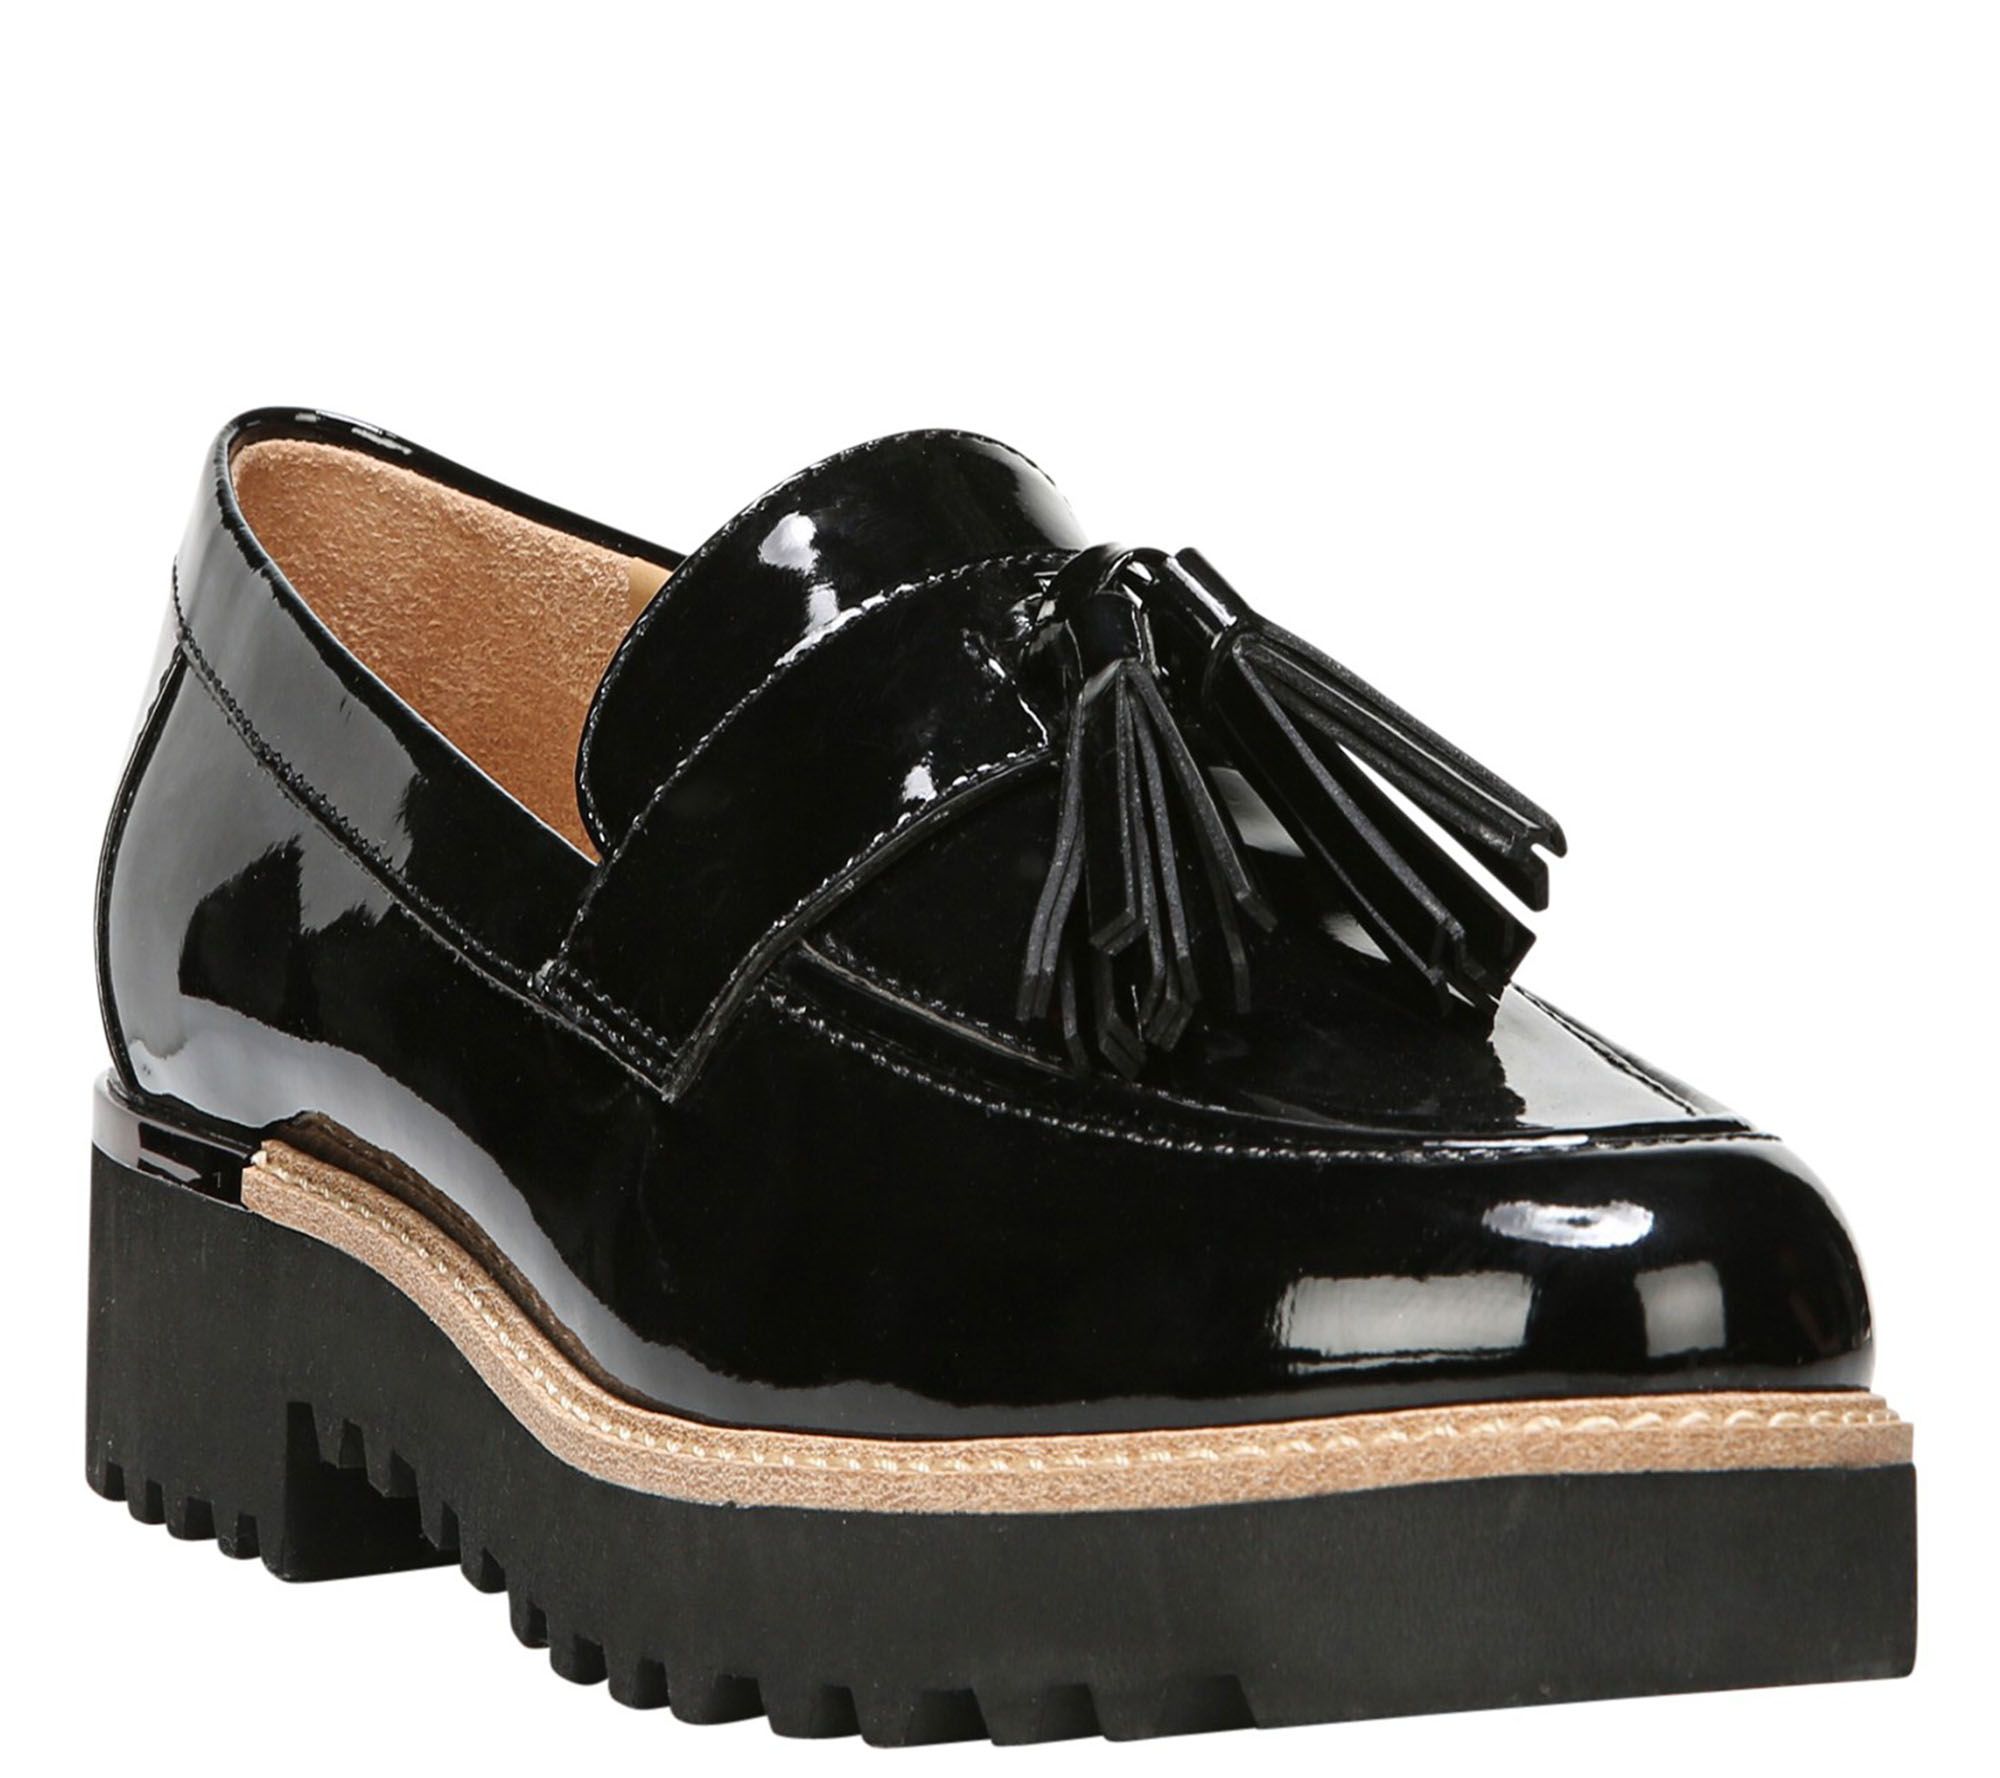 franco sarto black patent leather loafers